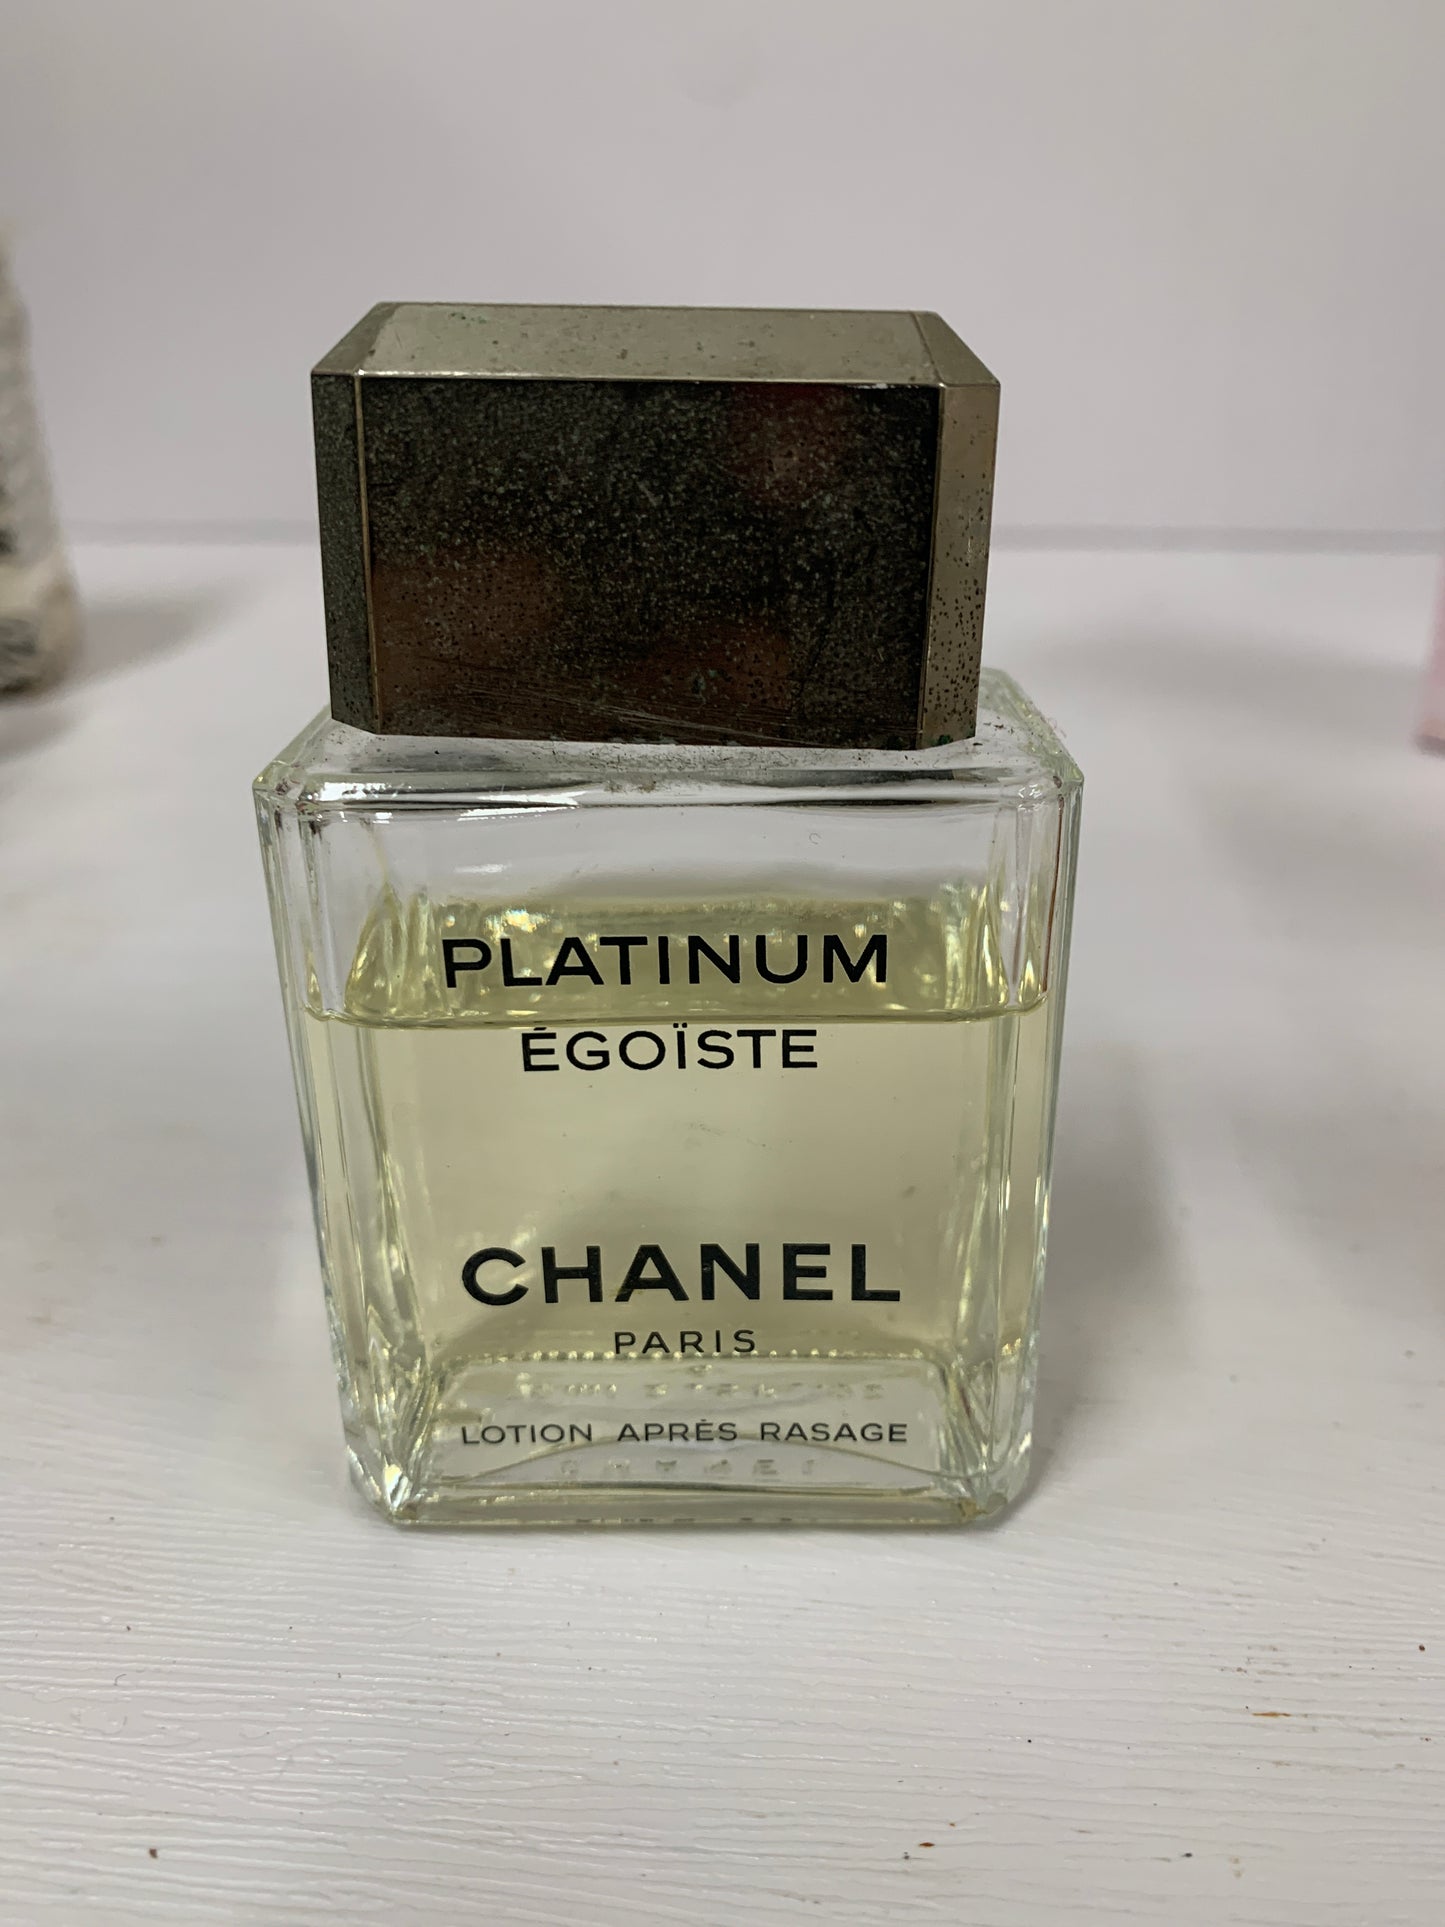 Égoïste by Chanel (Lotion Après Rasage) » Reviews & Perfume Facts